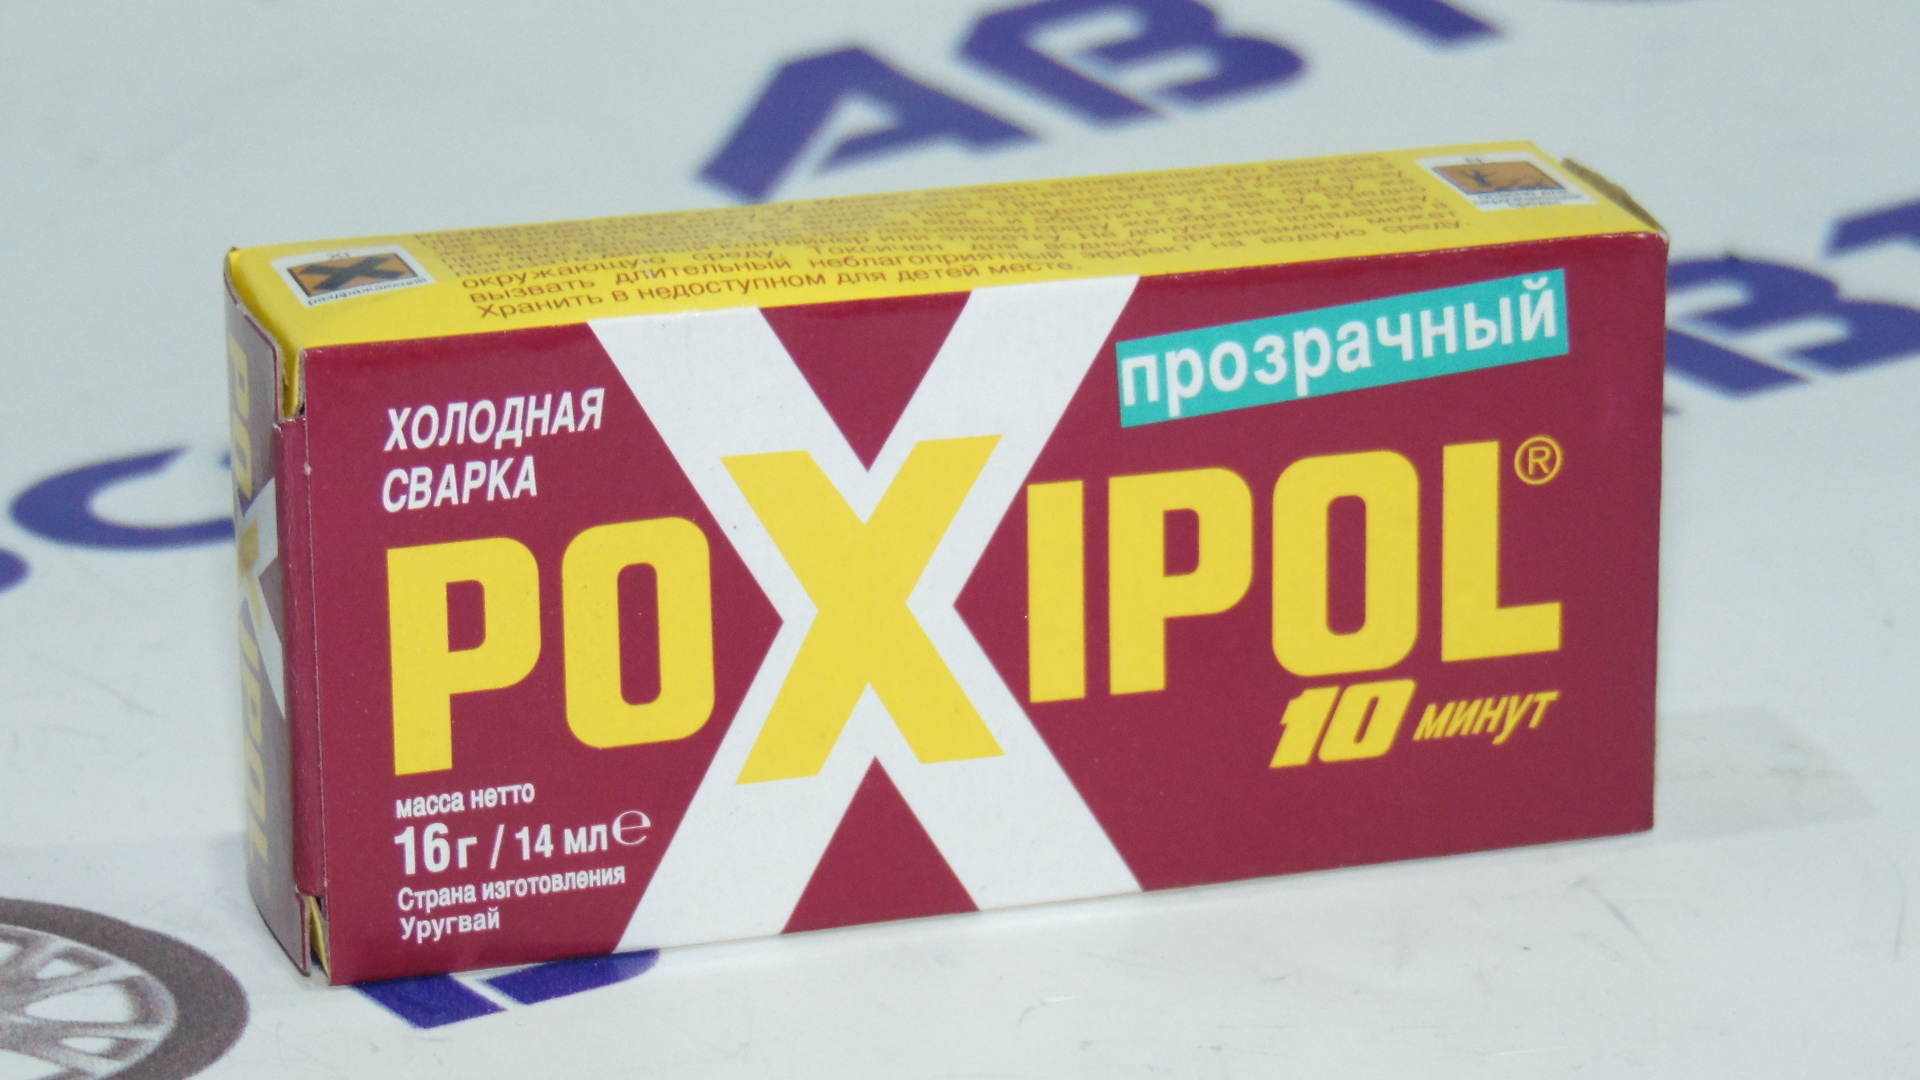 Эпоксидная сварка 16гр 10min (прозрачный)( КАРТОН POXIPOL